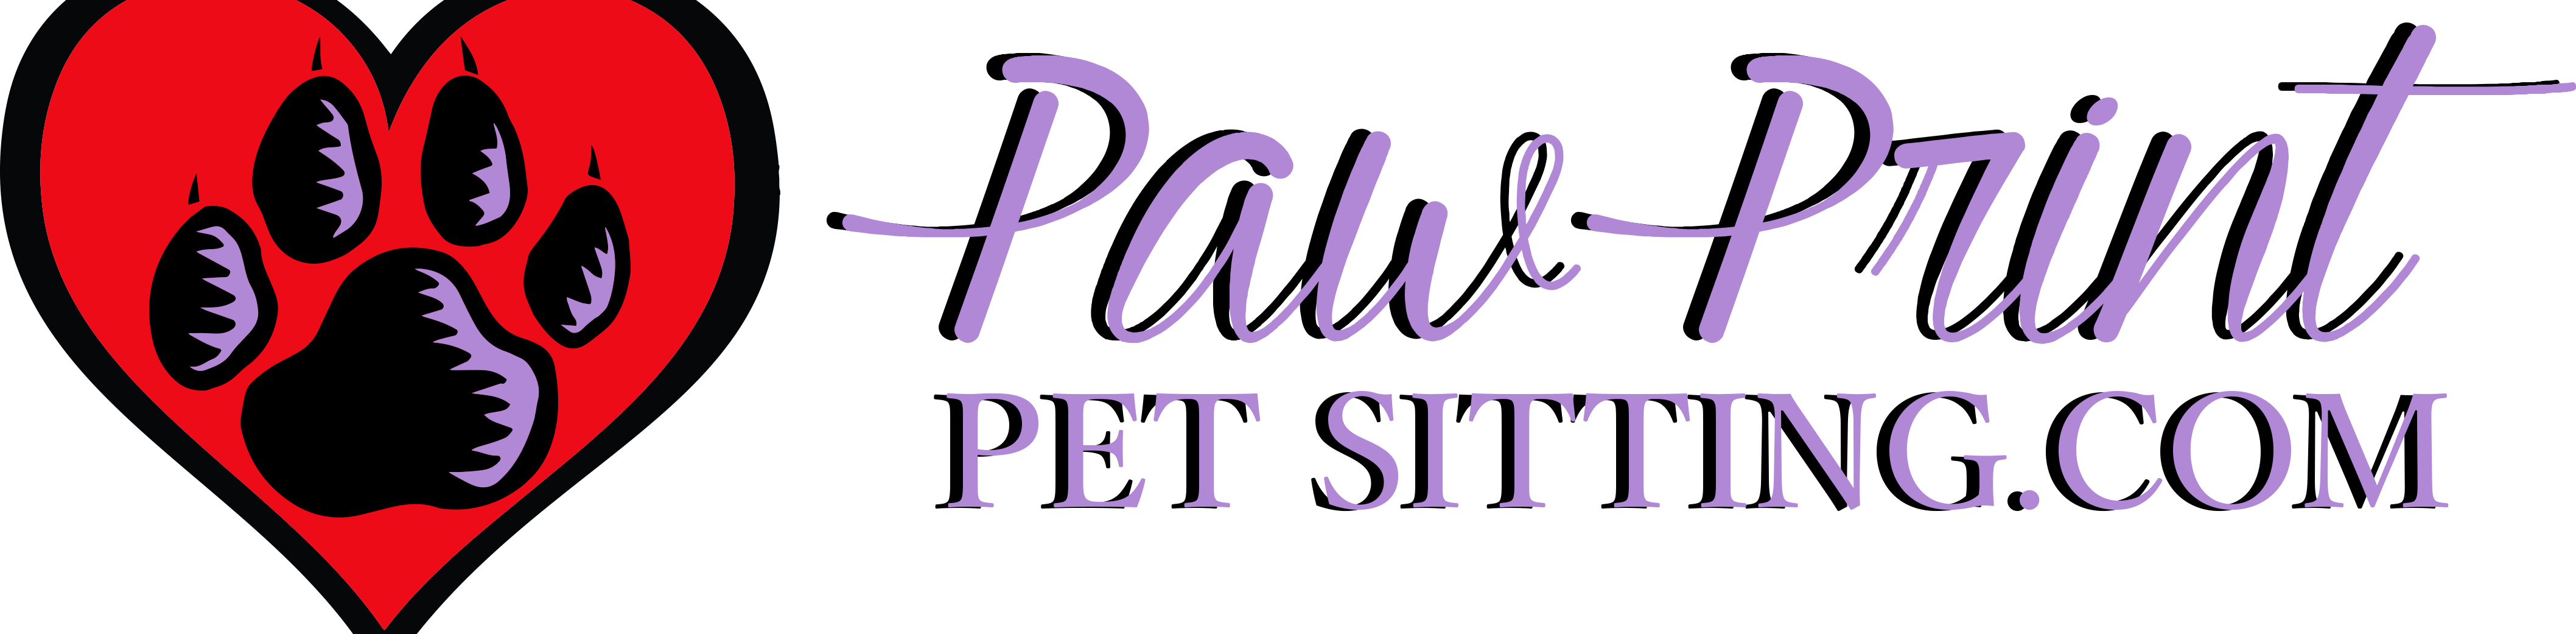 Daily Dog Walking And Pet Sitting Minneapolis - Pet Sitting (4232x1041), Png Download